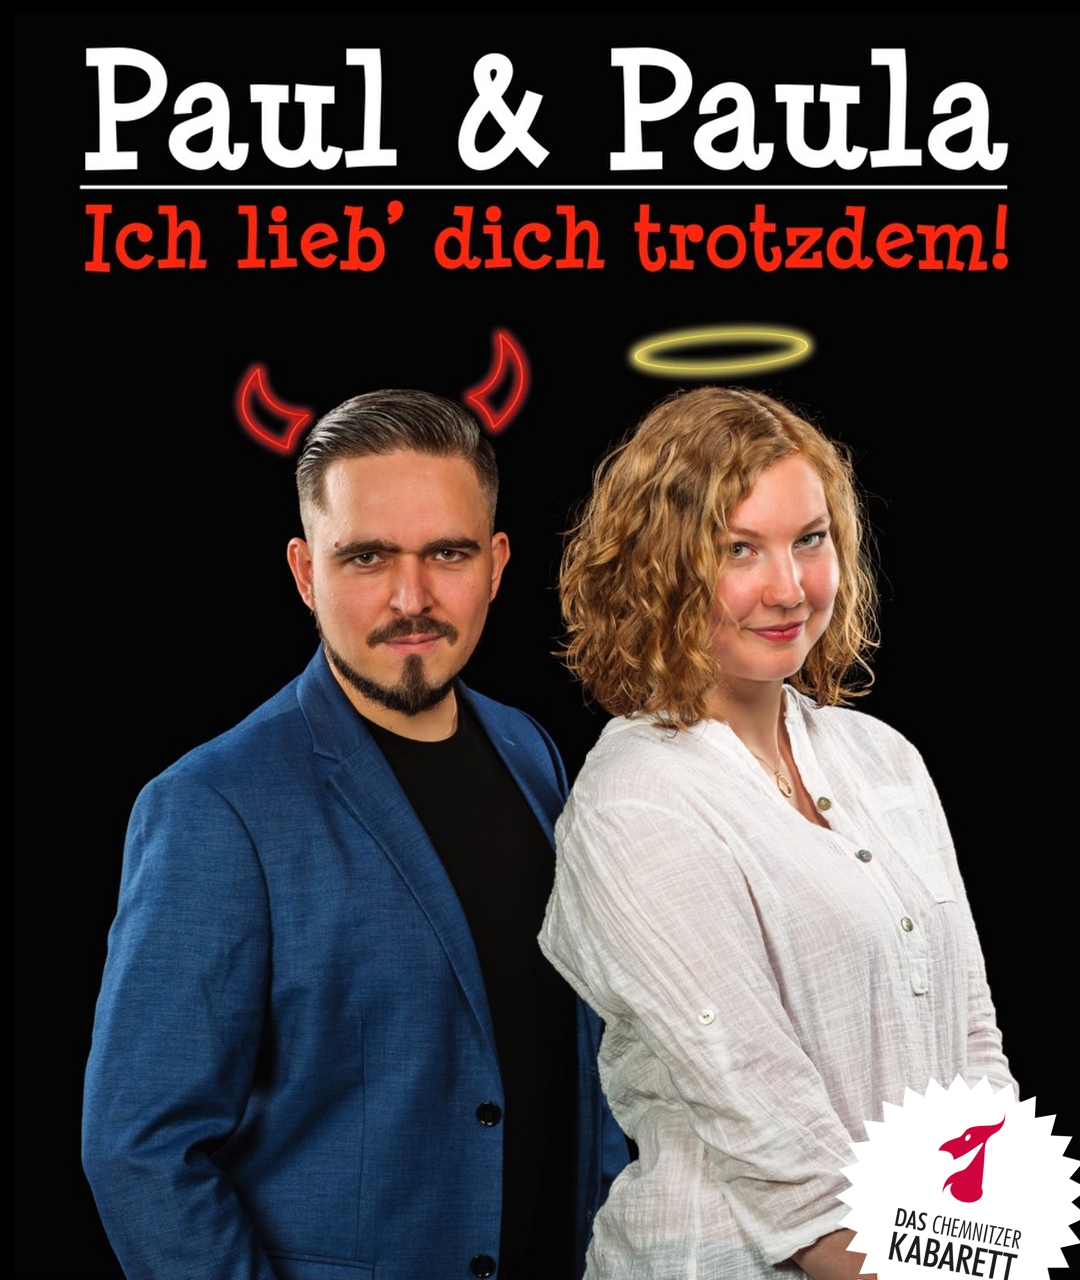 Paul&Paula - Ich lieb dich trotzdem